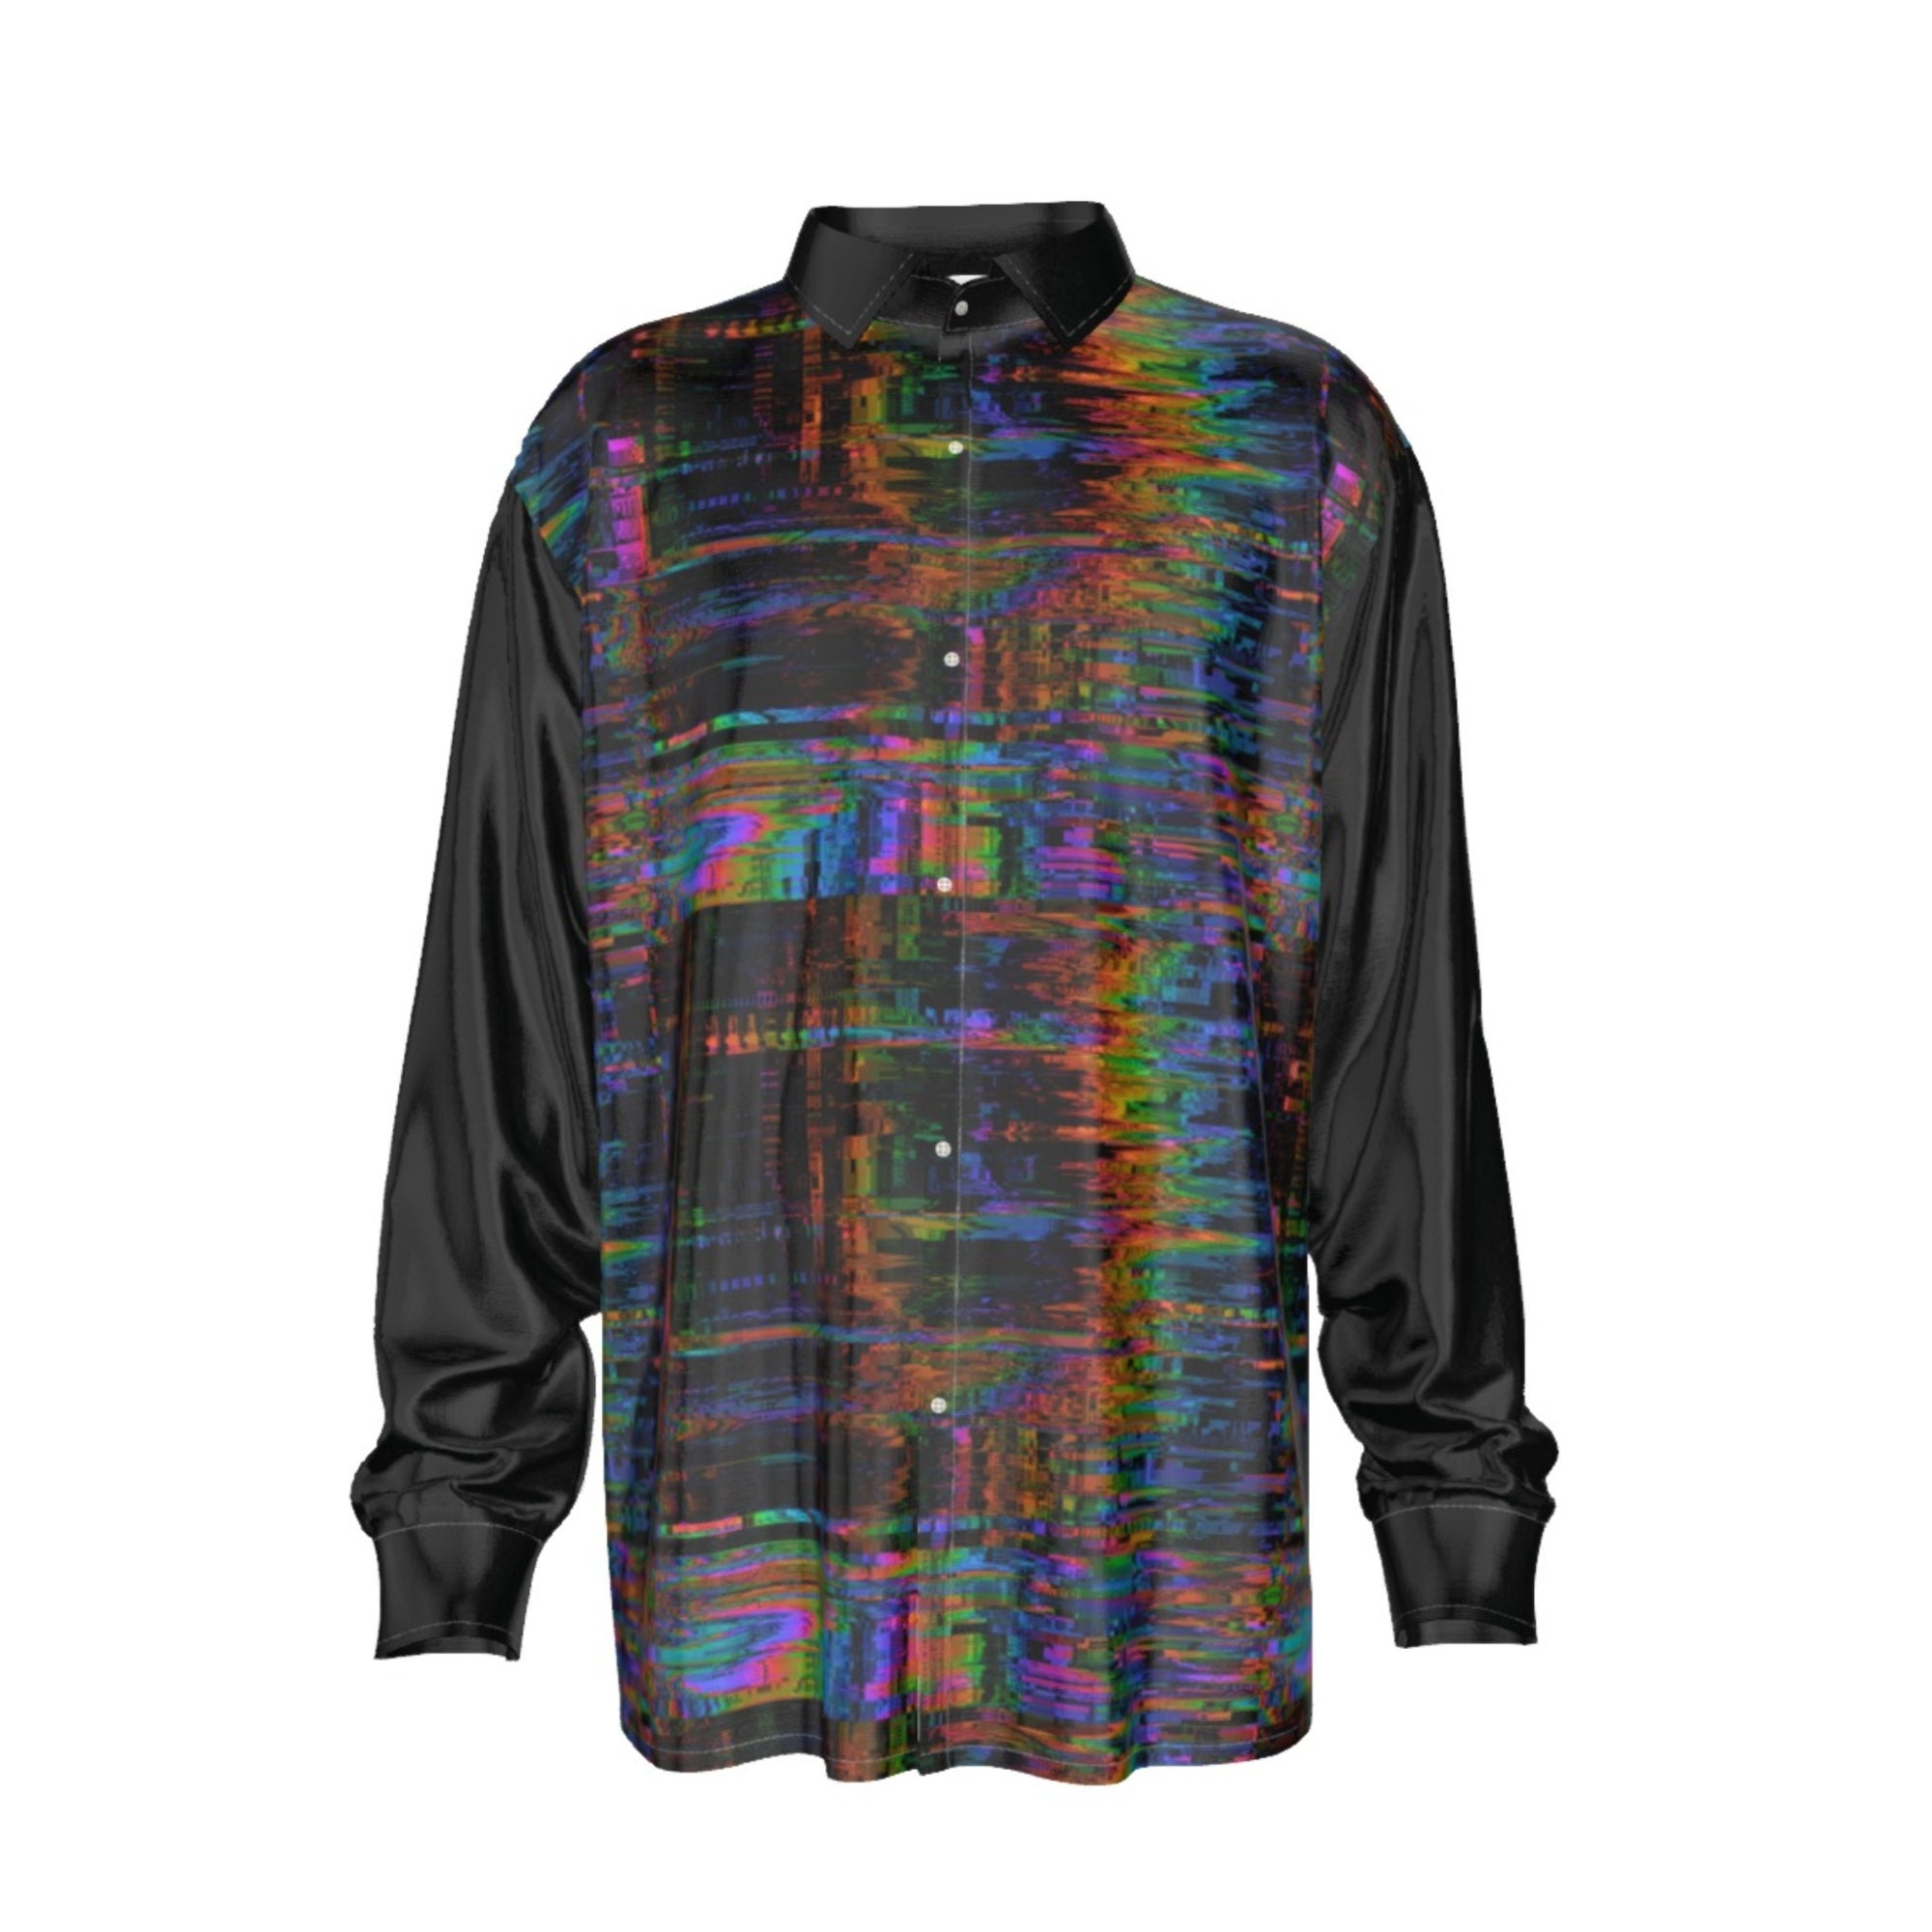 Solarpunk clothing for men (an aesthetic approach) : r/SolarpunkAiArt